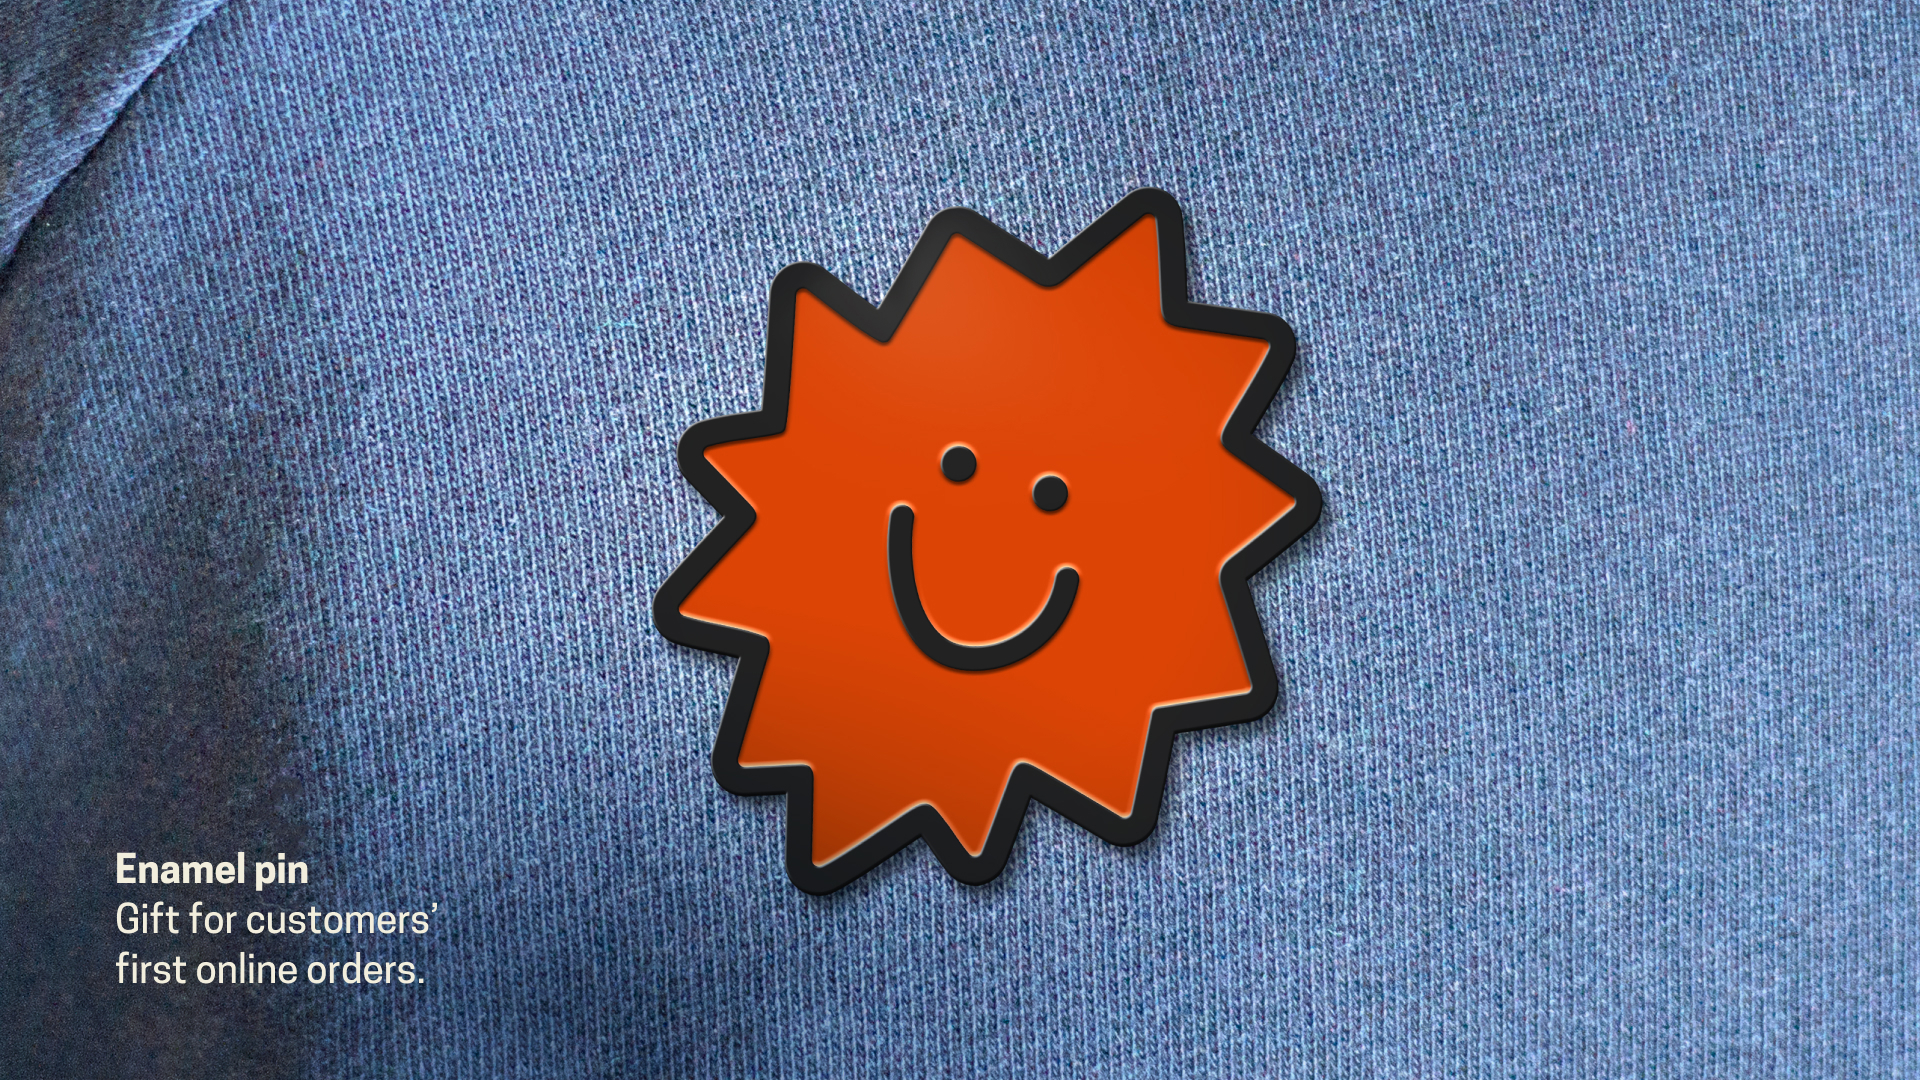 pin design of starburst-shaped brand icon